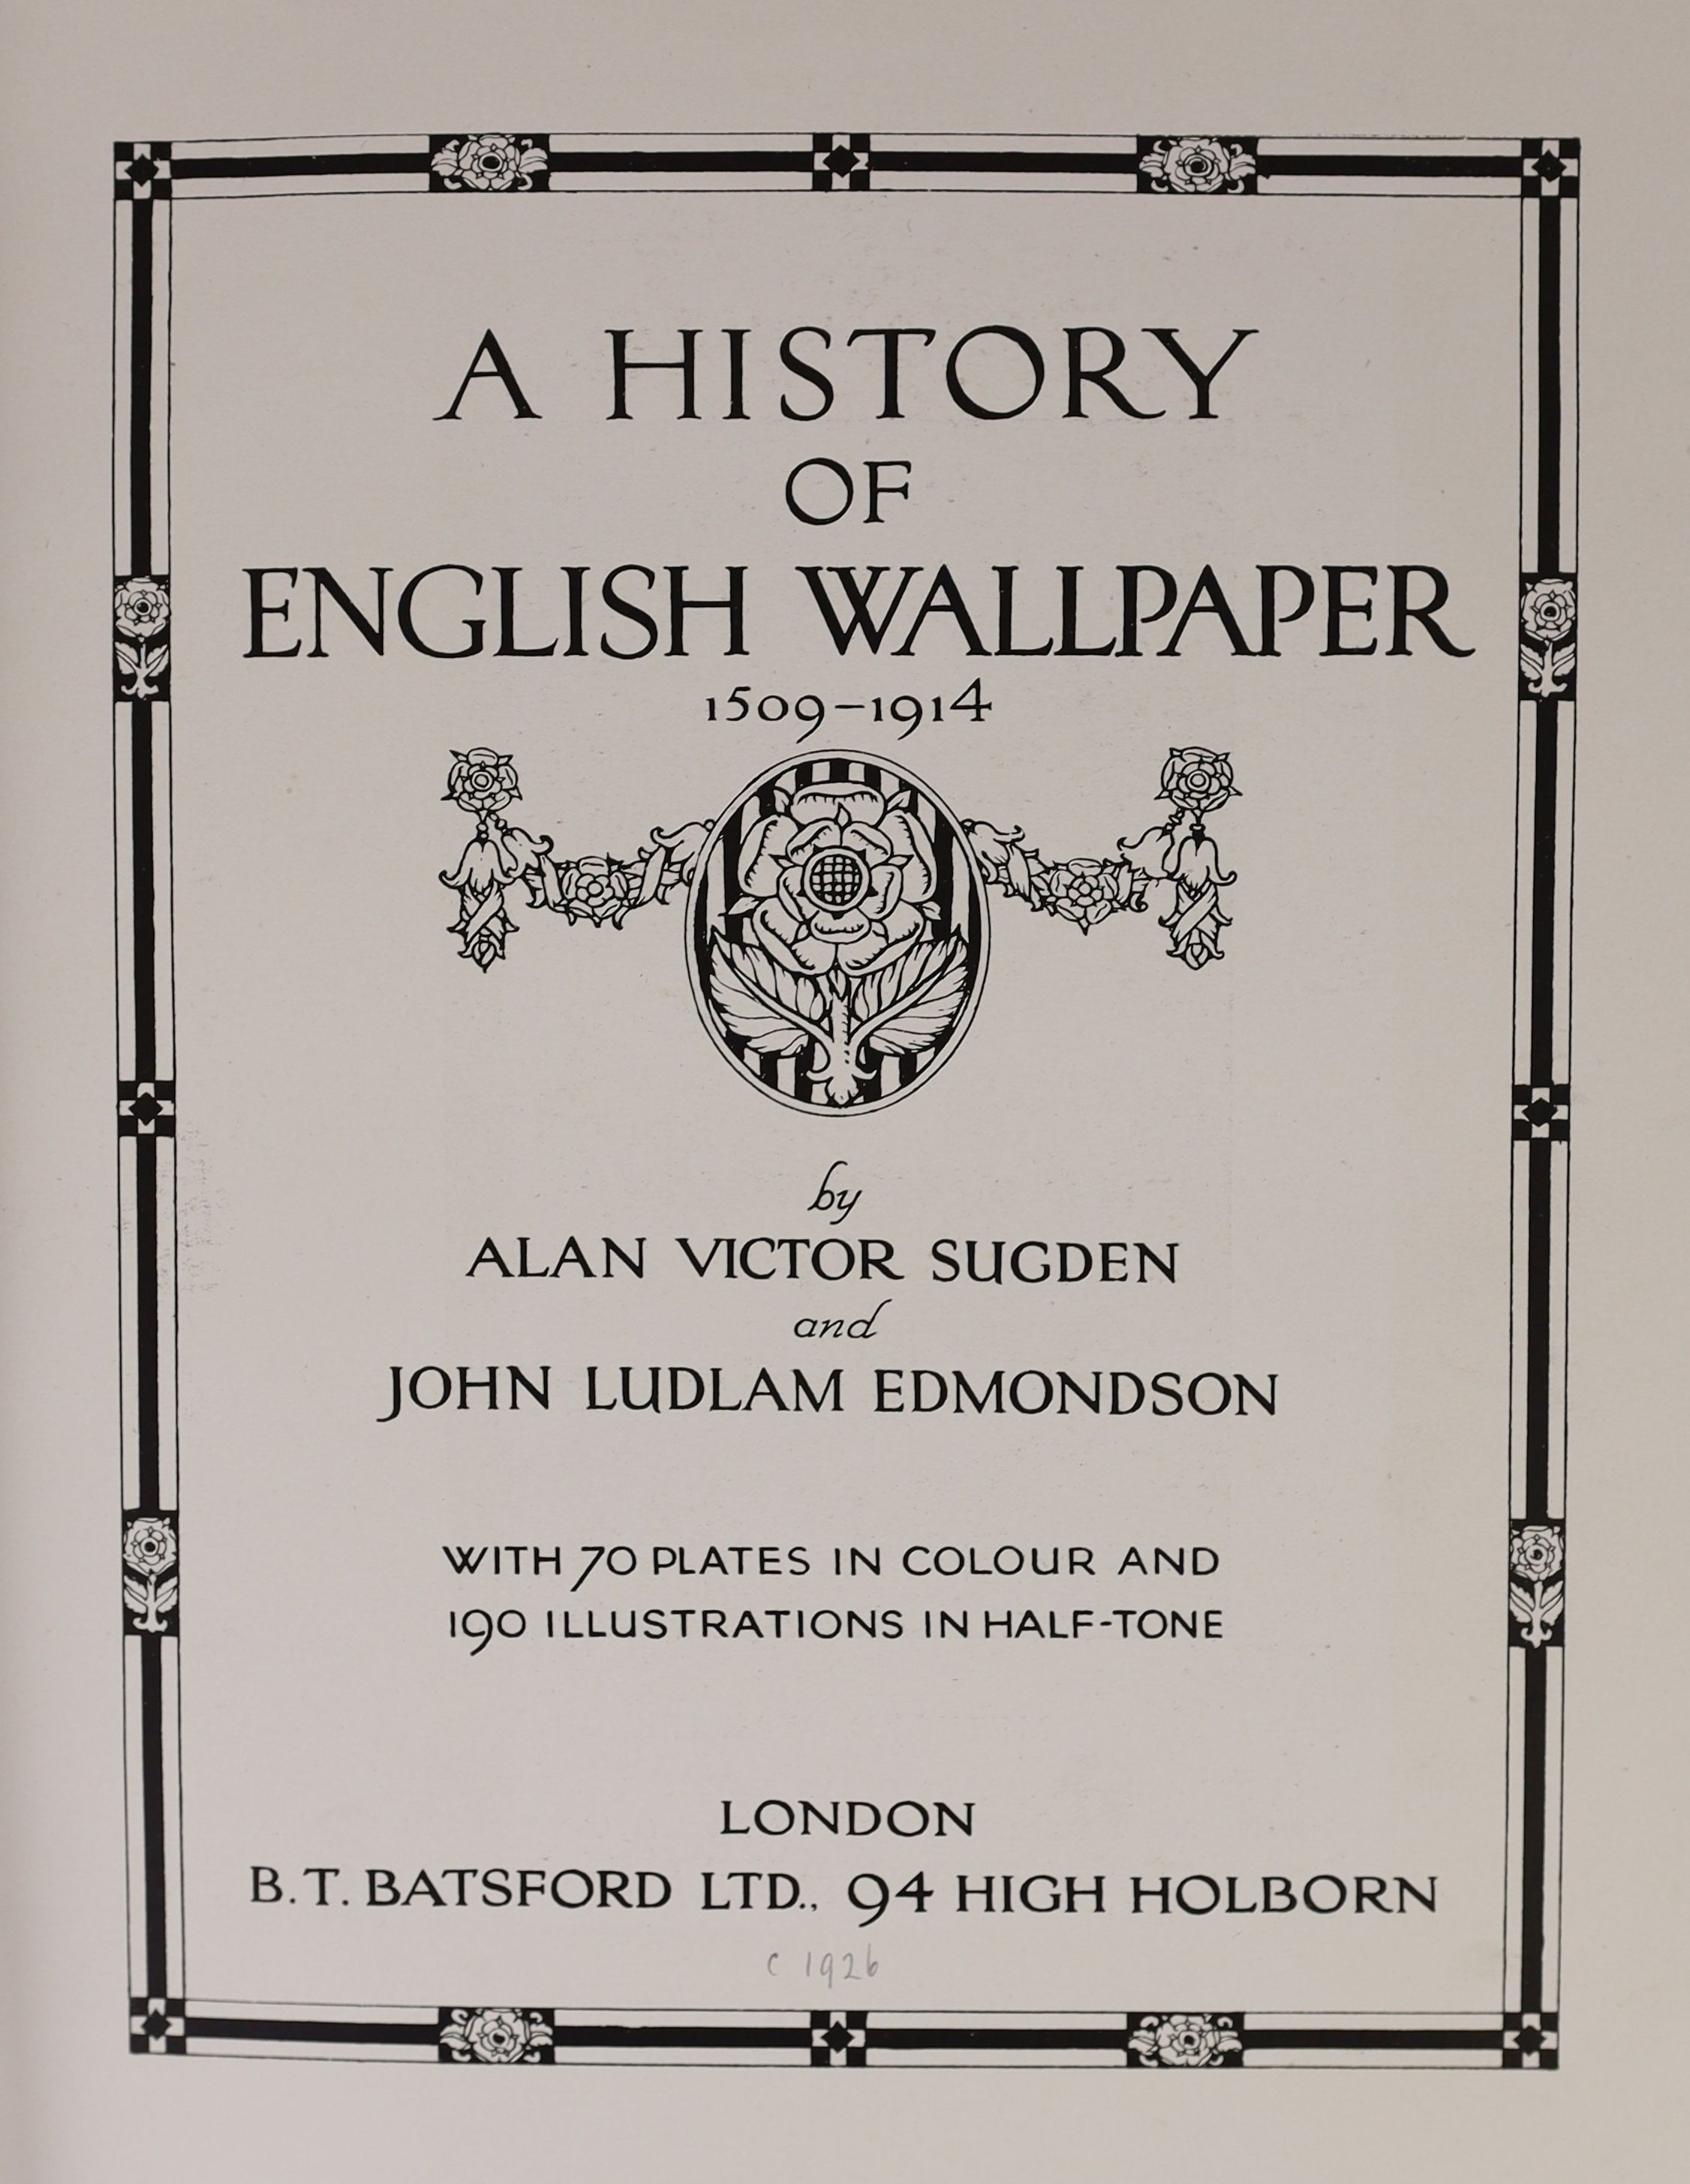 Sugden, Alan Victor and Edmondson, John Ludlam - A History of English Wallpaper, 4to, original buckram, in slightly torn d/j, with 70 mounted colour plates, B.T. Batsford, London, [1926]